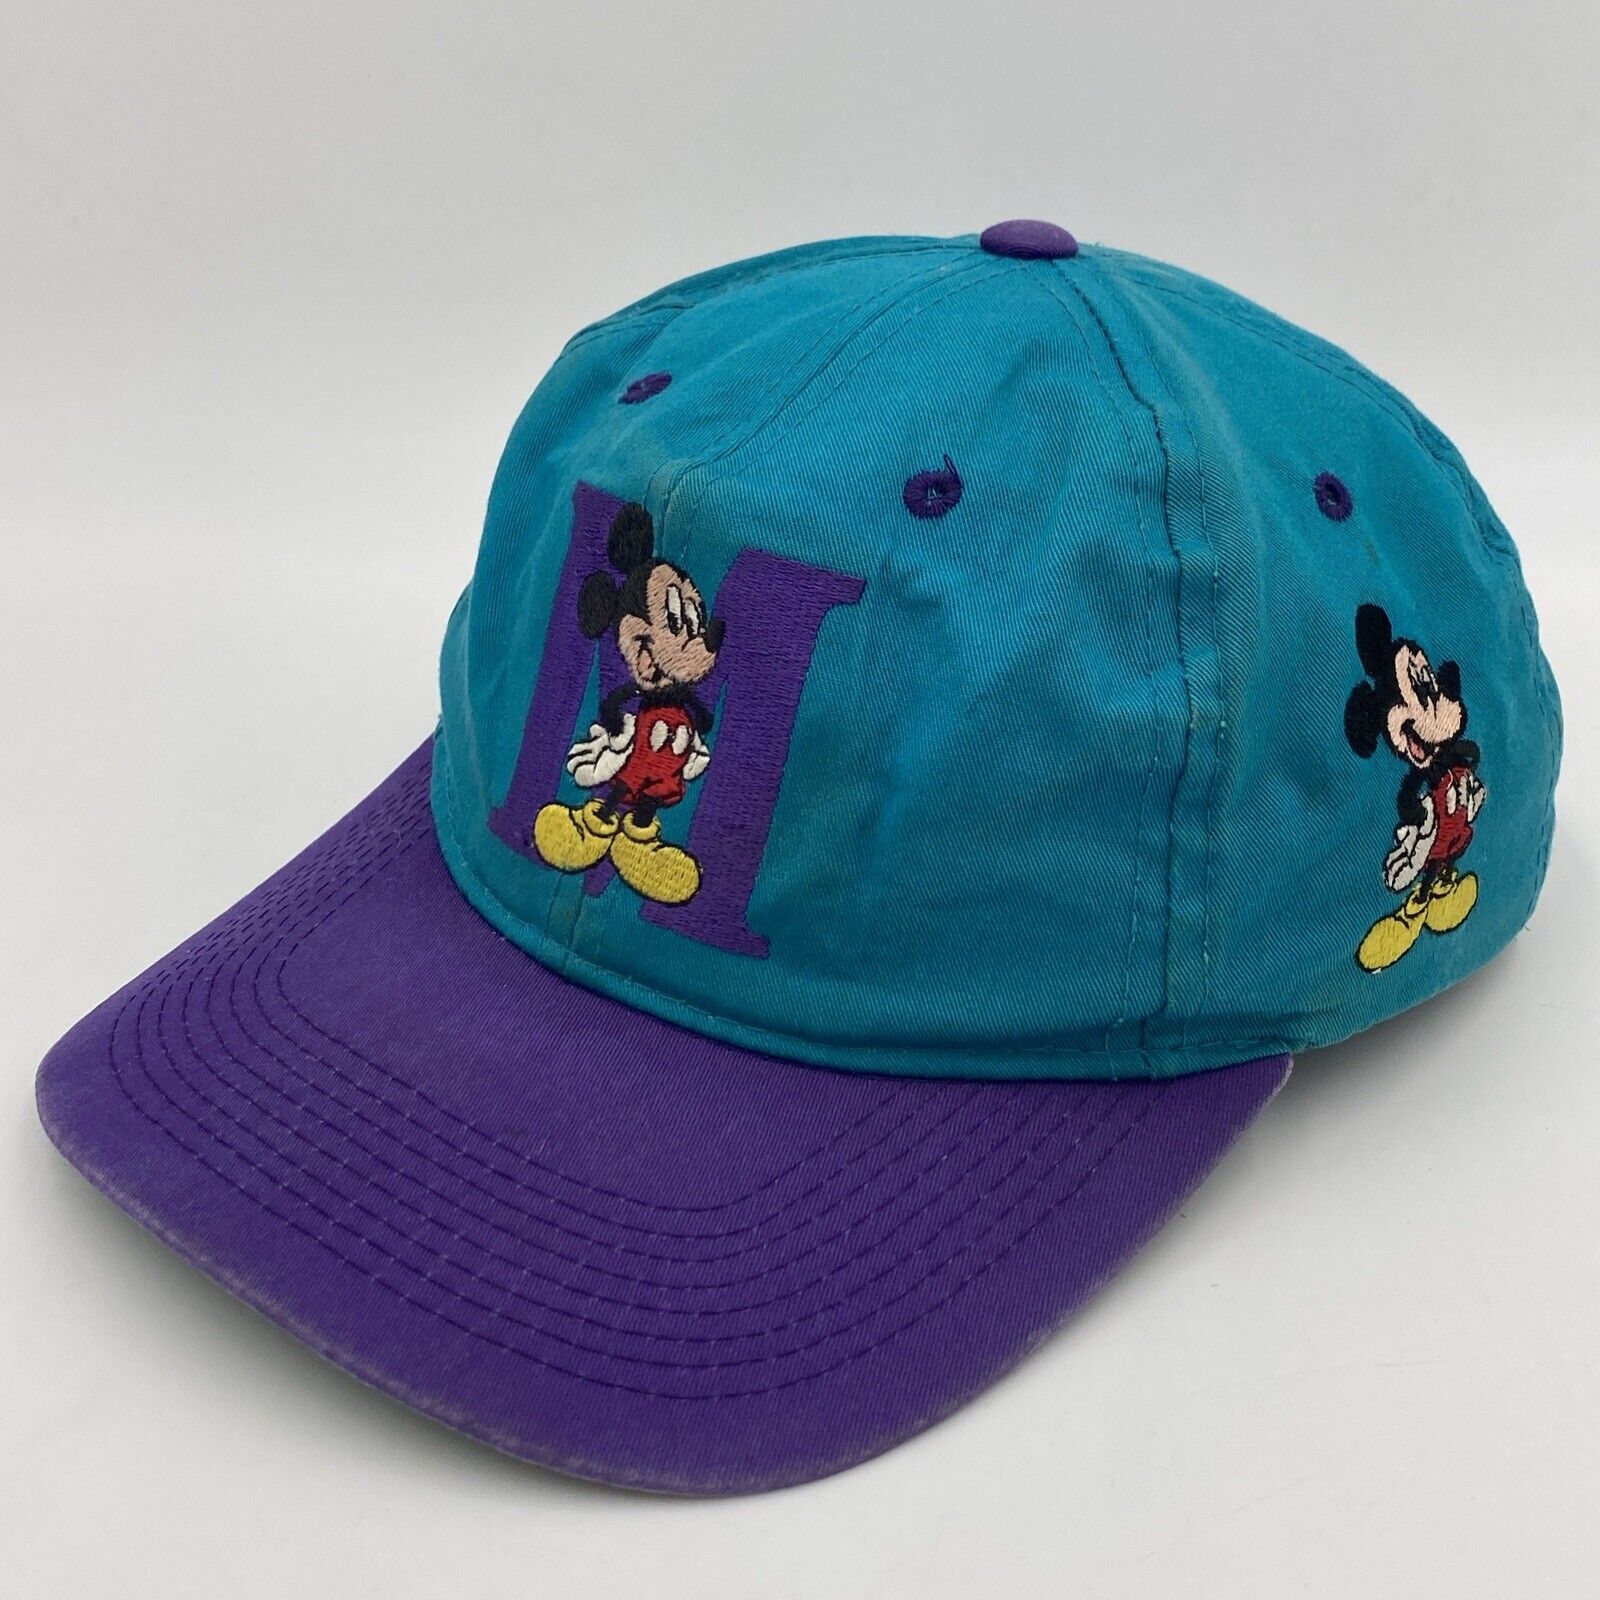 VTG 90s Mickey Unlimited Mouse Disney Teal Purple Adjustable Snapback Cap Hat